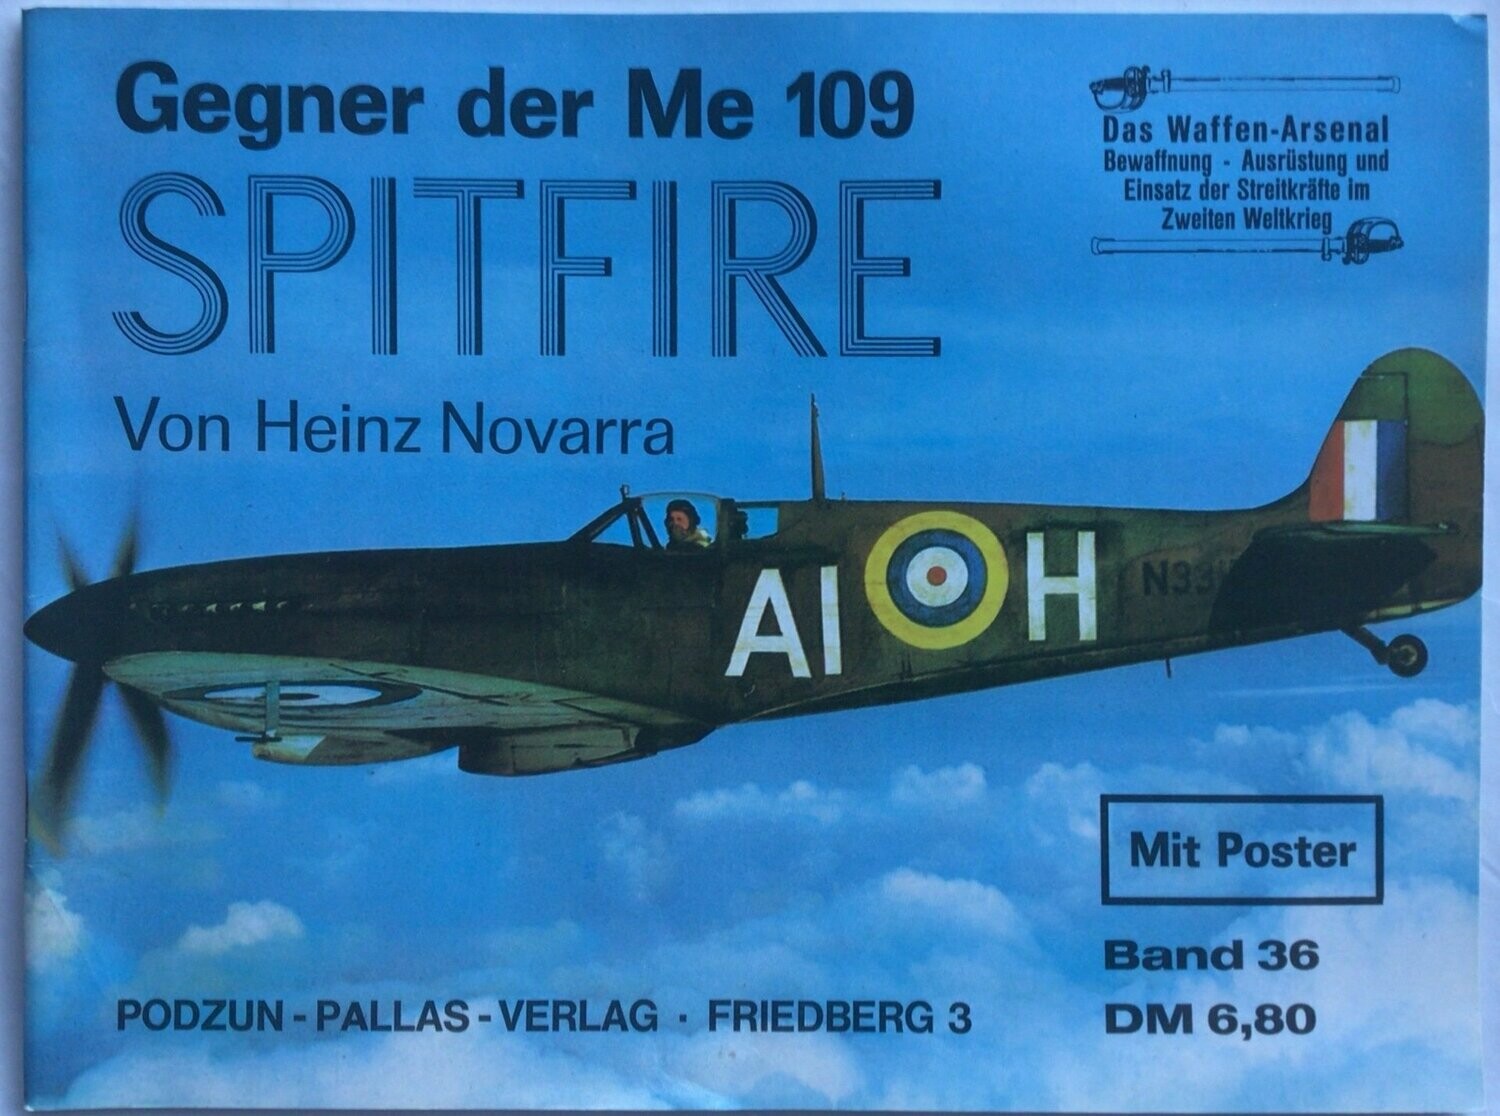 Das Waffen-Arsenal Band 36: Gegner der Me 109 SPITFIRE